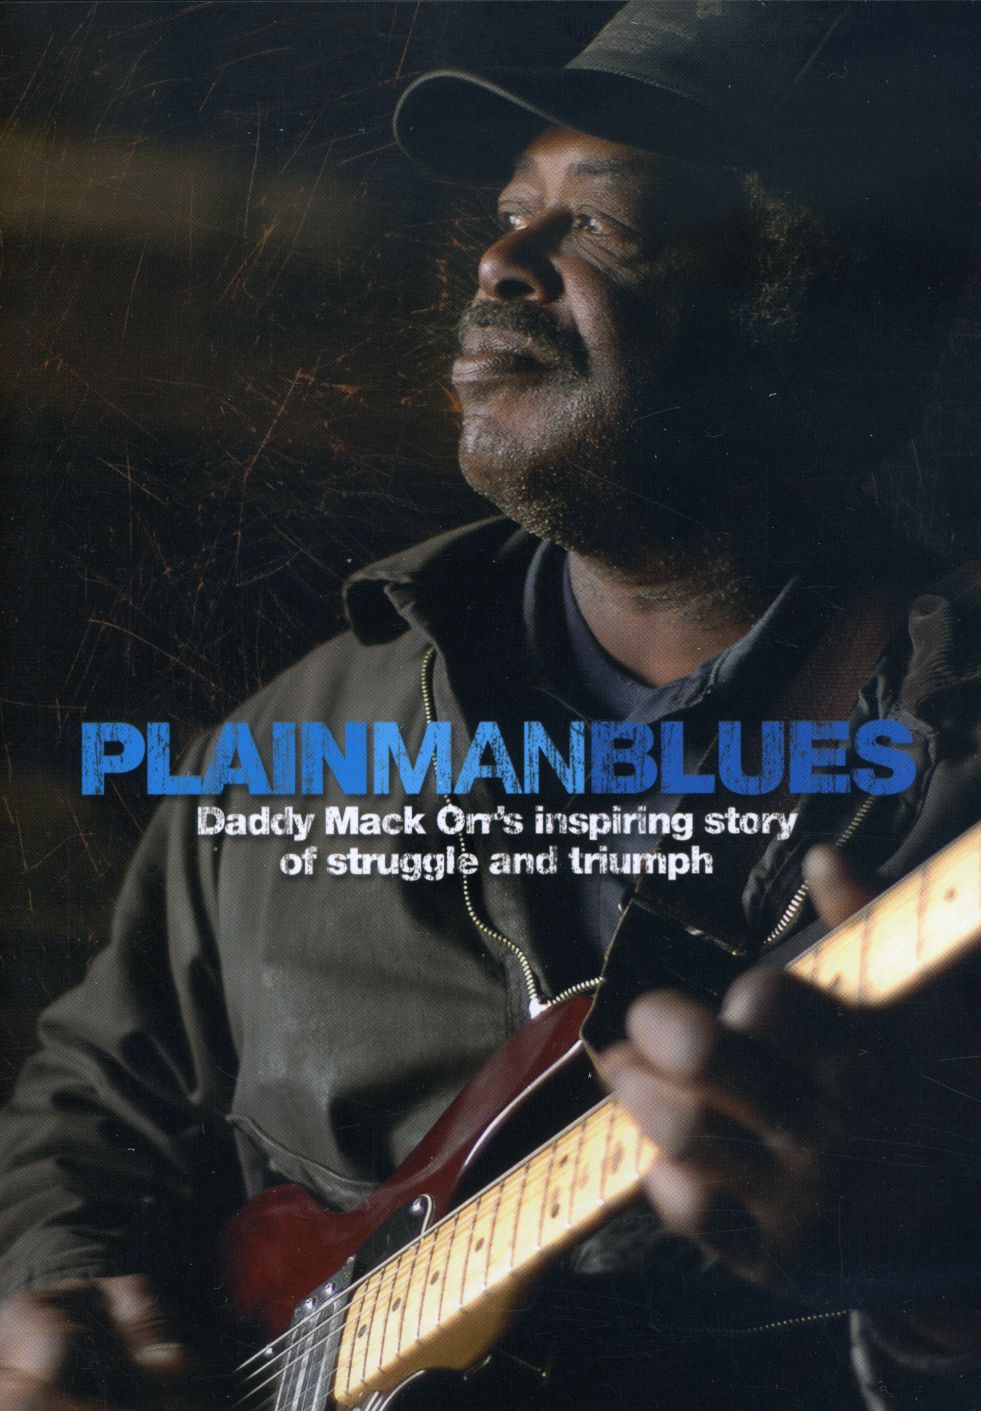 PLAIN MAN BLUES: DADDY MACK ORR'S INSPIRING